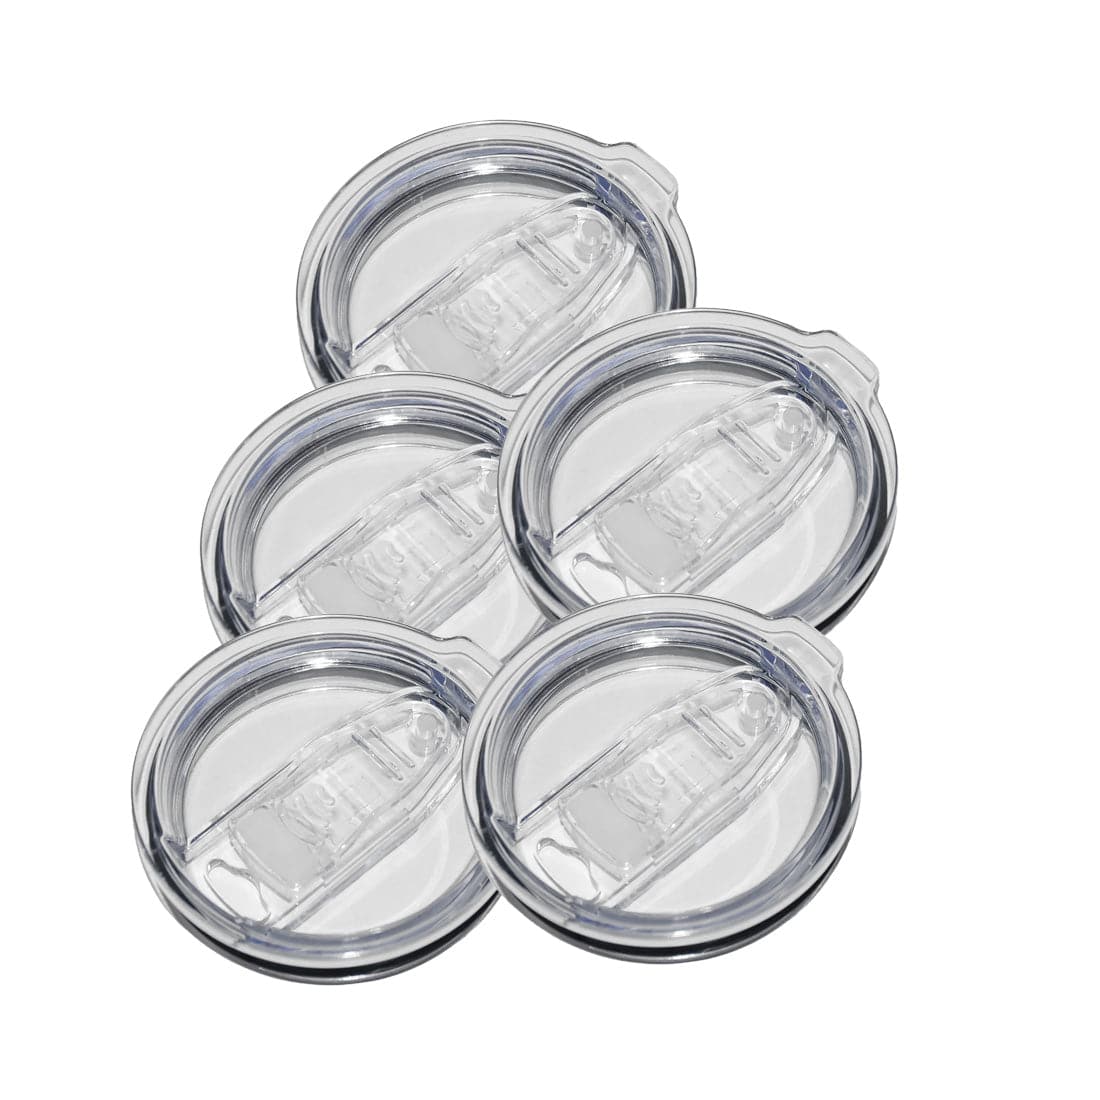 Joto 20oz Stainless Steel Tumbler lids - Pack of 5 - Joto Imaging Supplies US